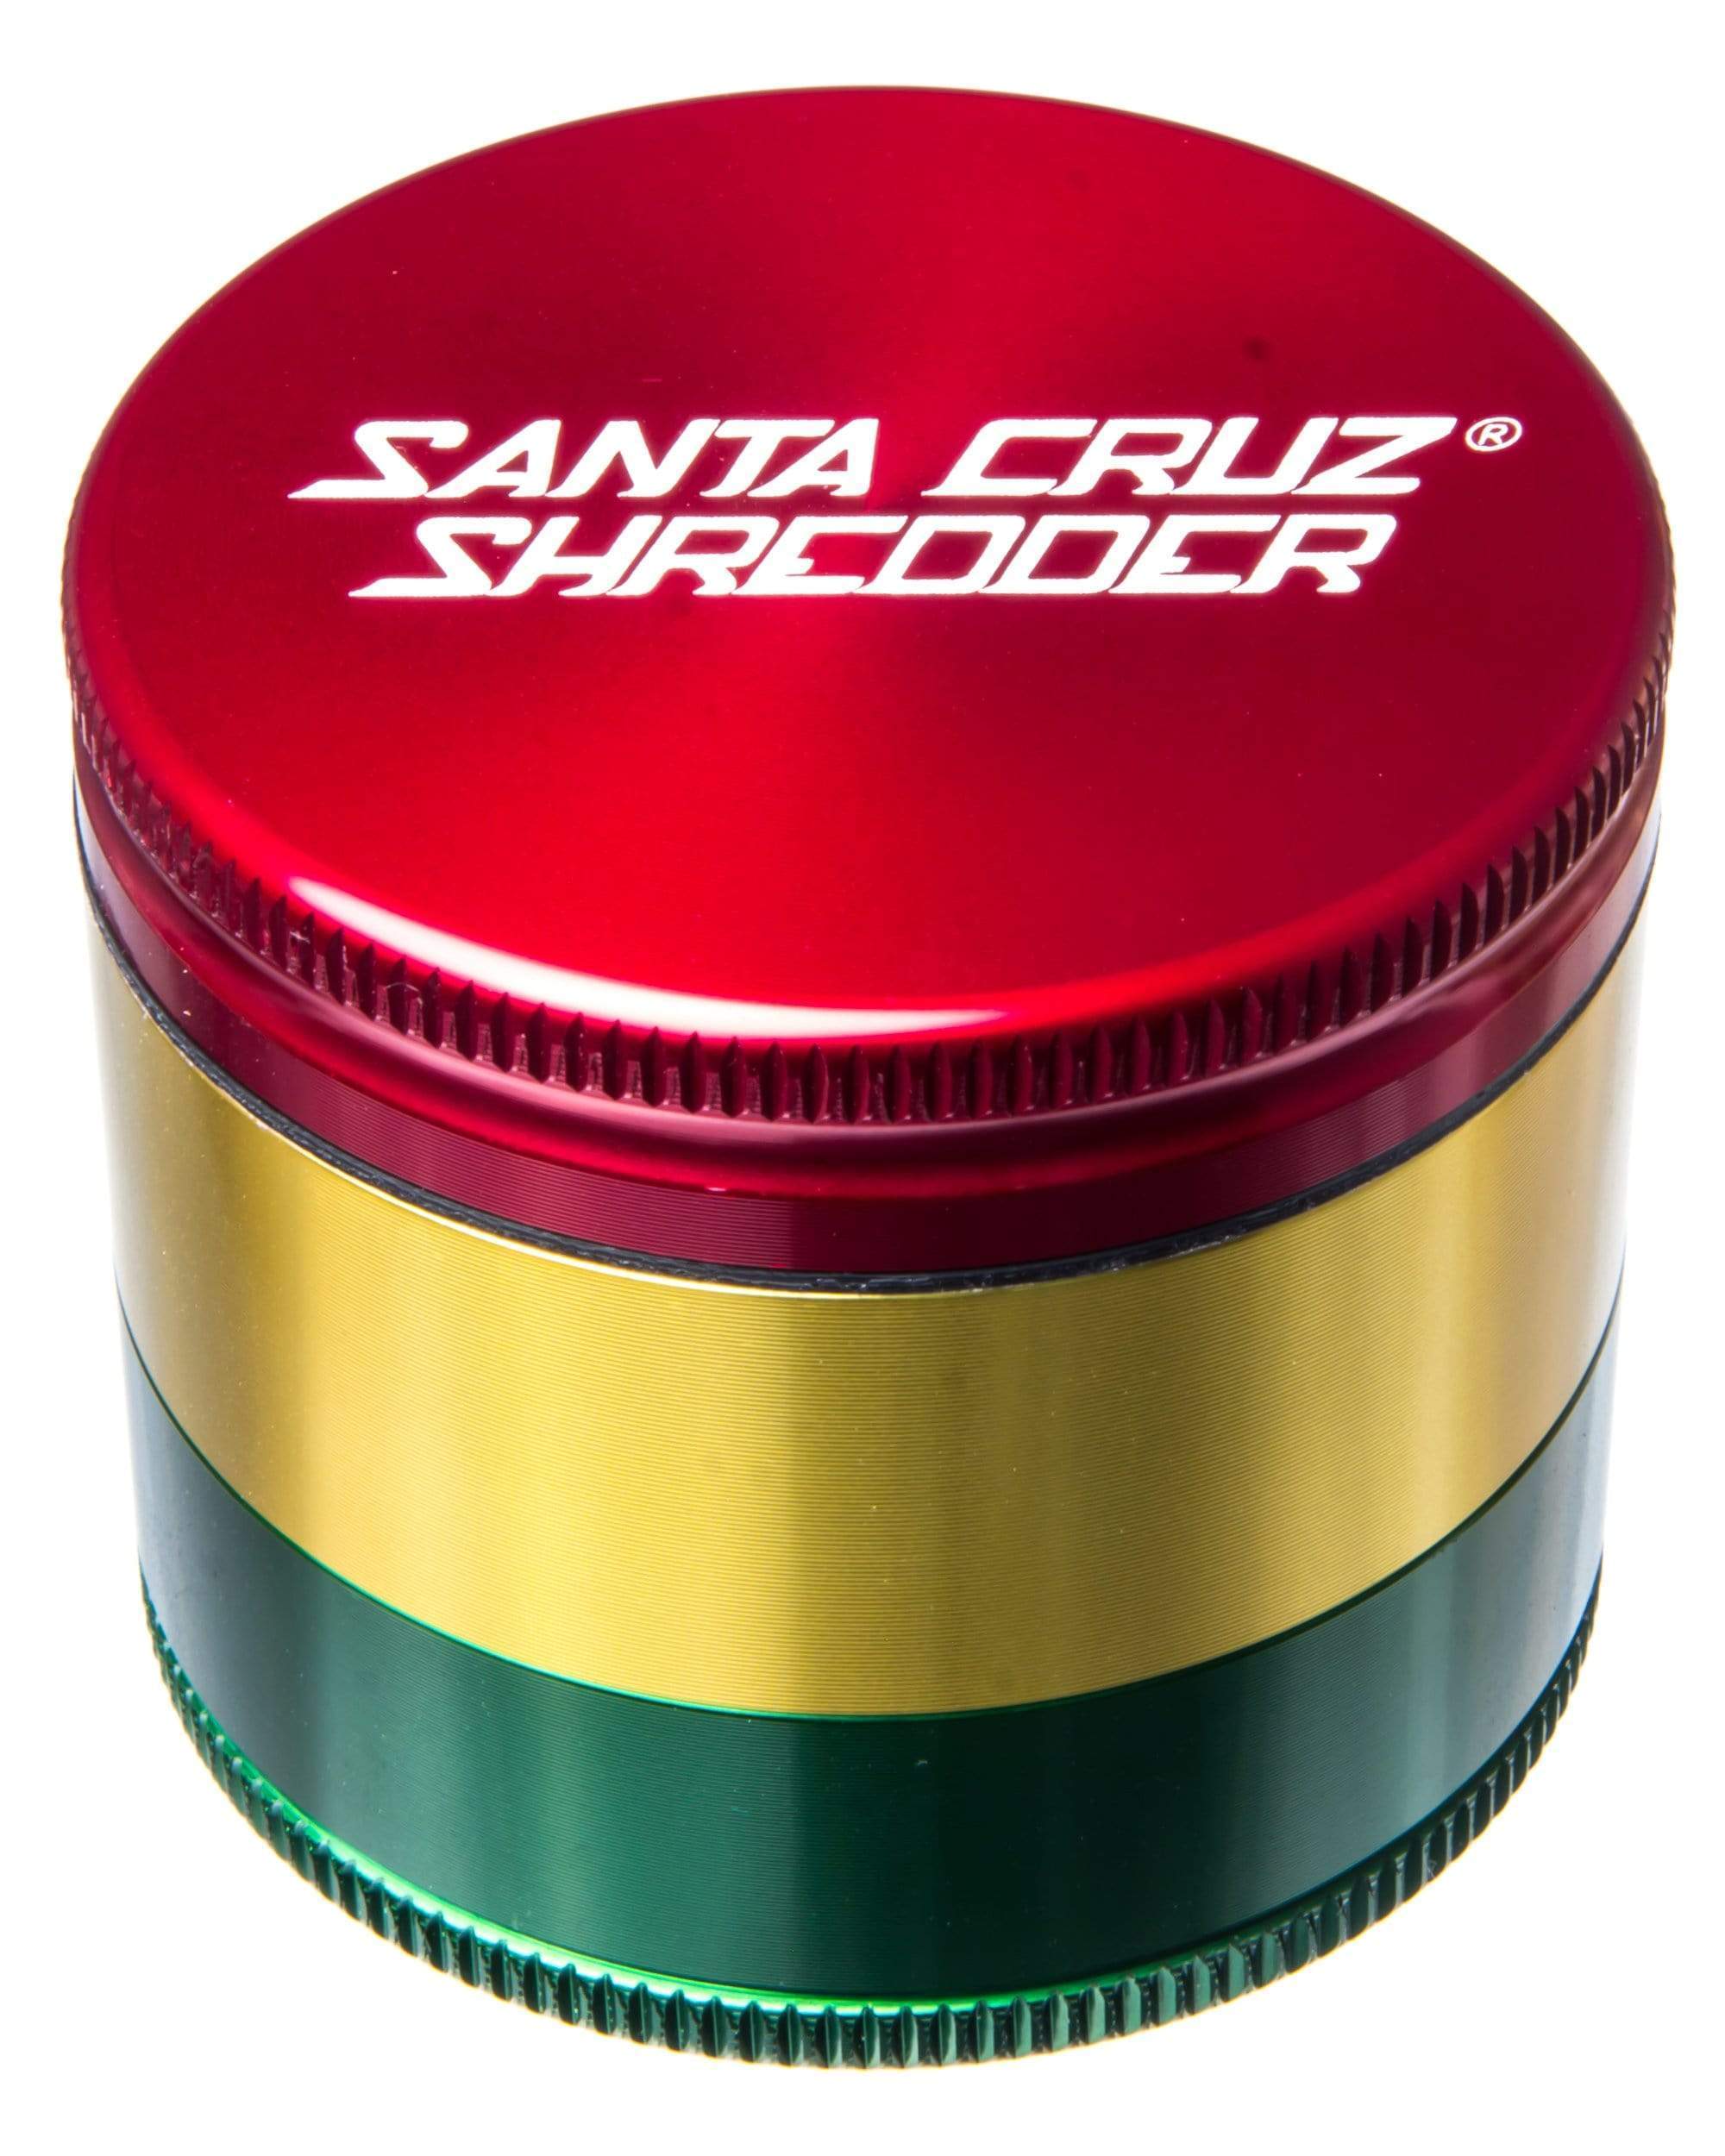 Santa Cruz Shredder Rasta grinder 587400000000